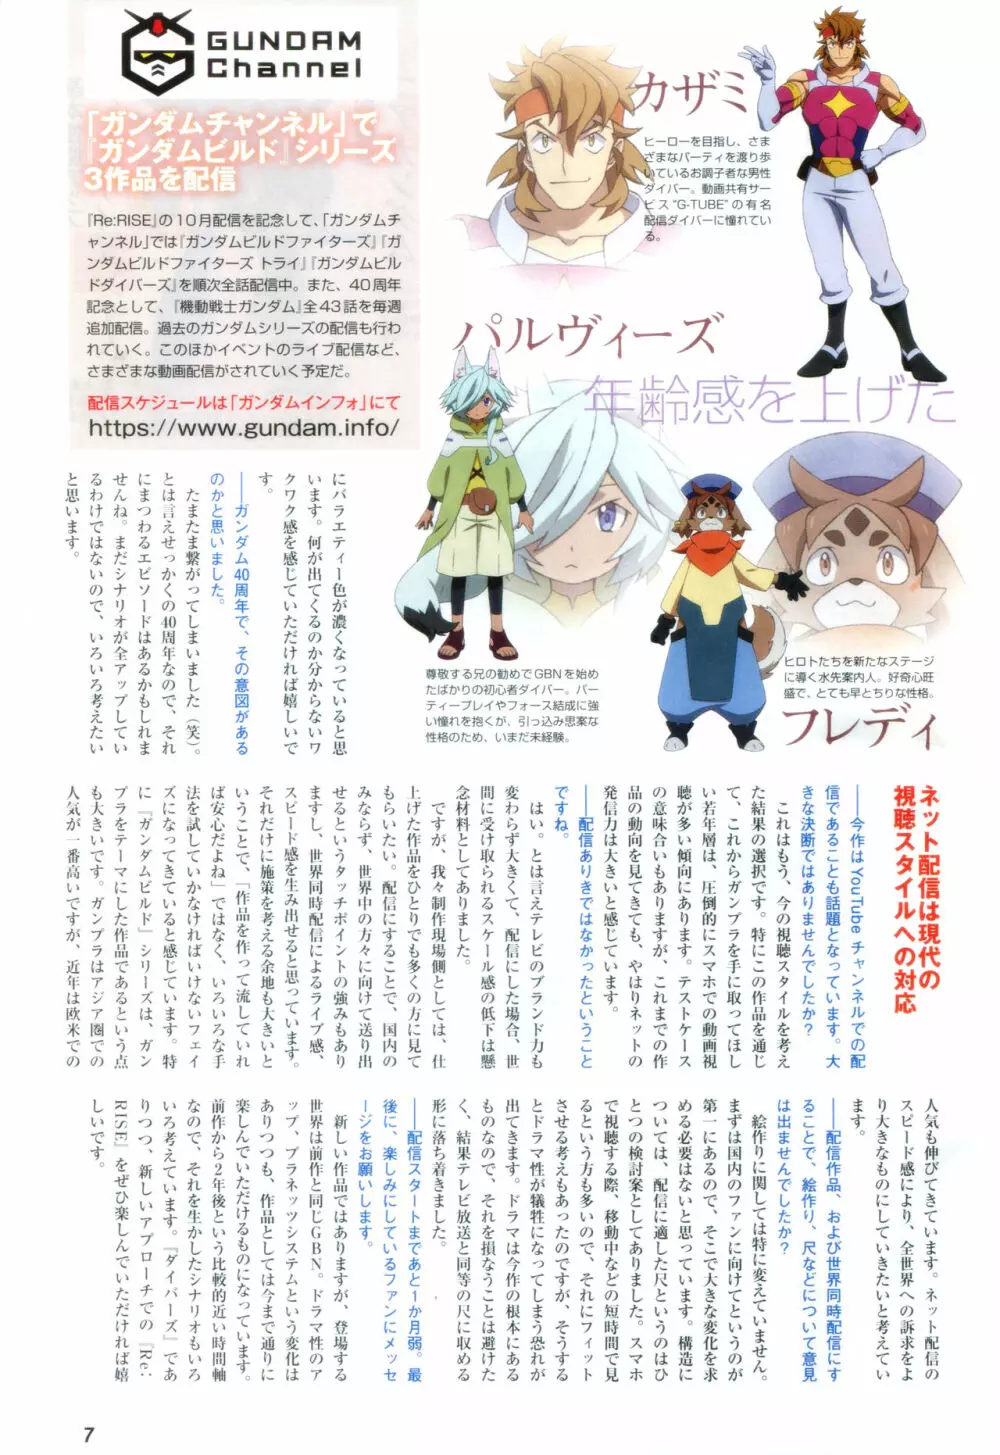 Gundam Ace – October 2019 10ページ